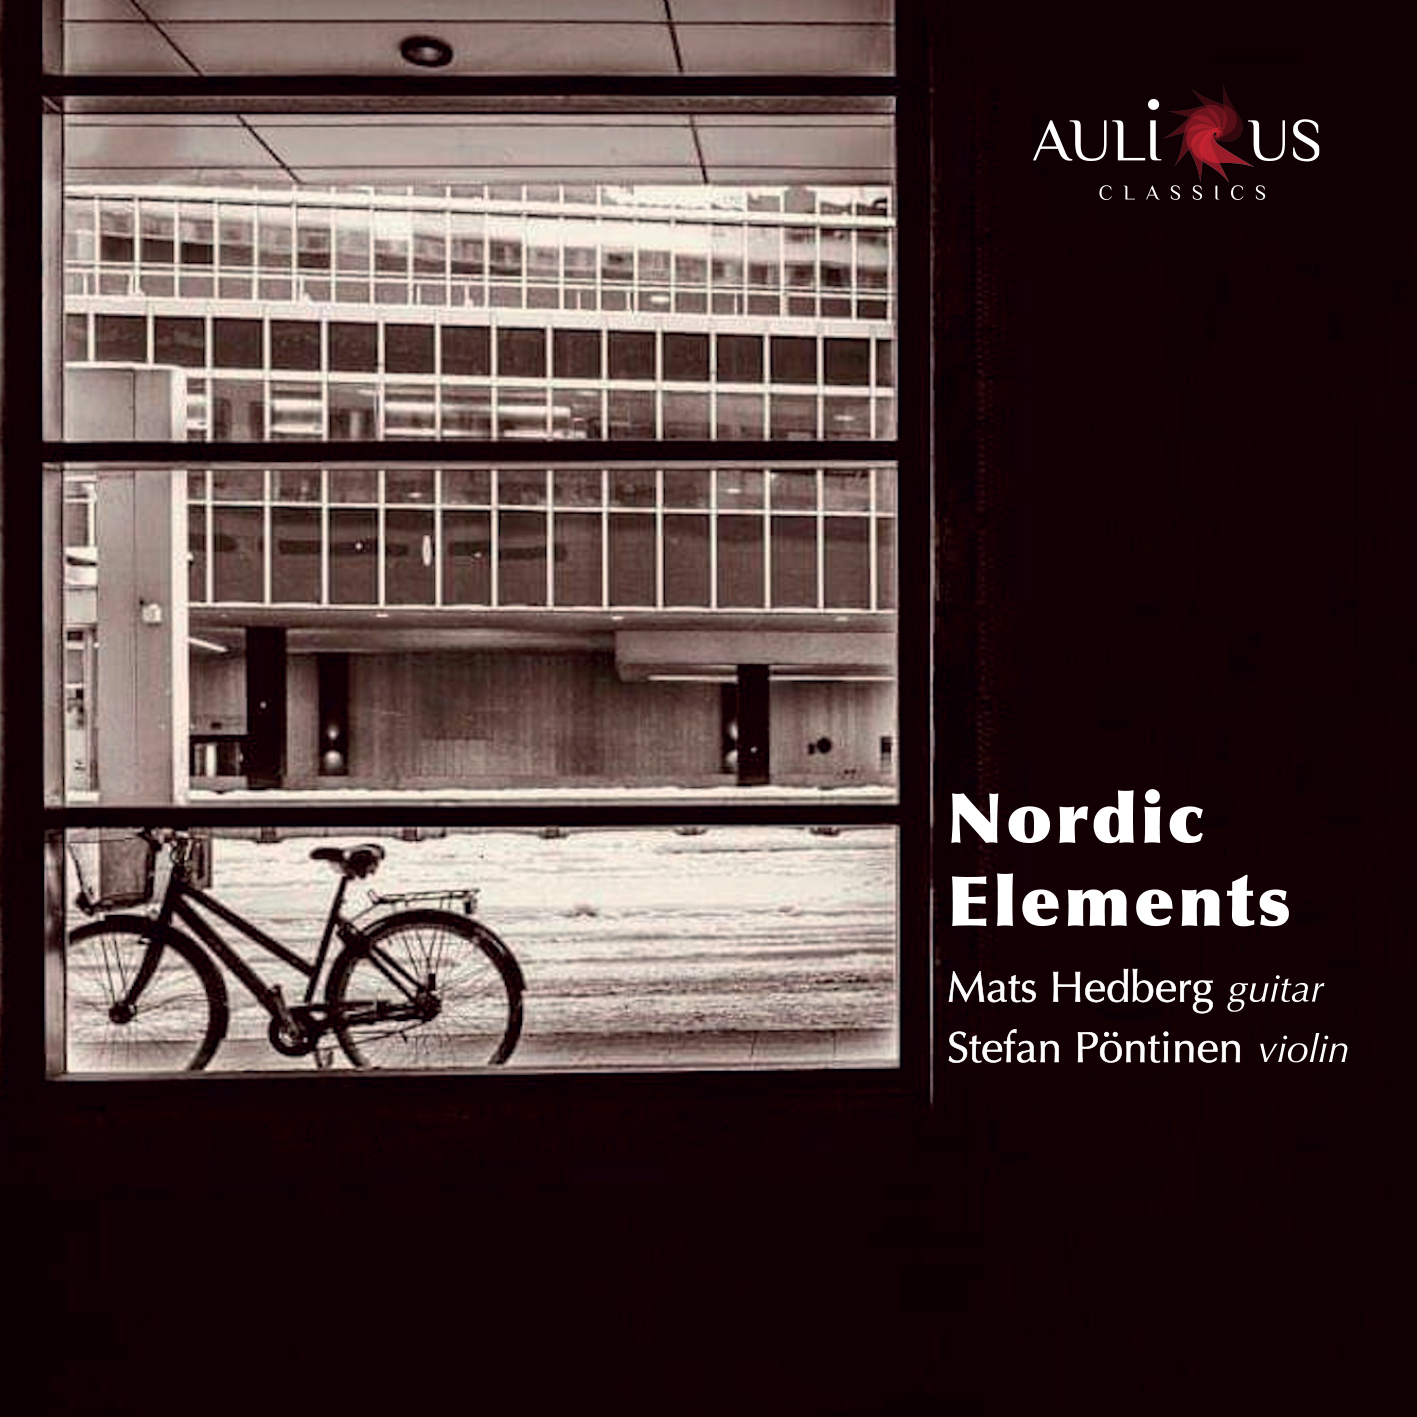 ALC 0085 Nordic elements | Aulicus Classics